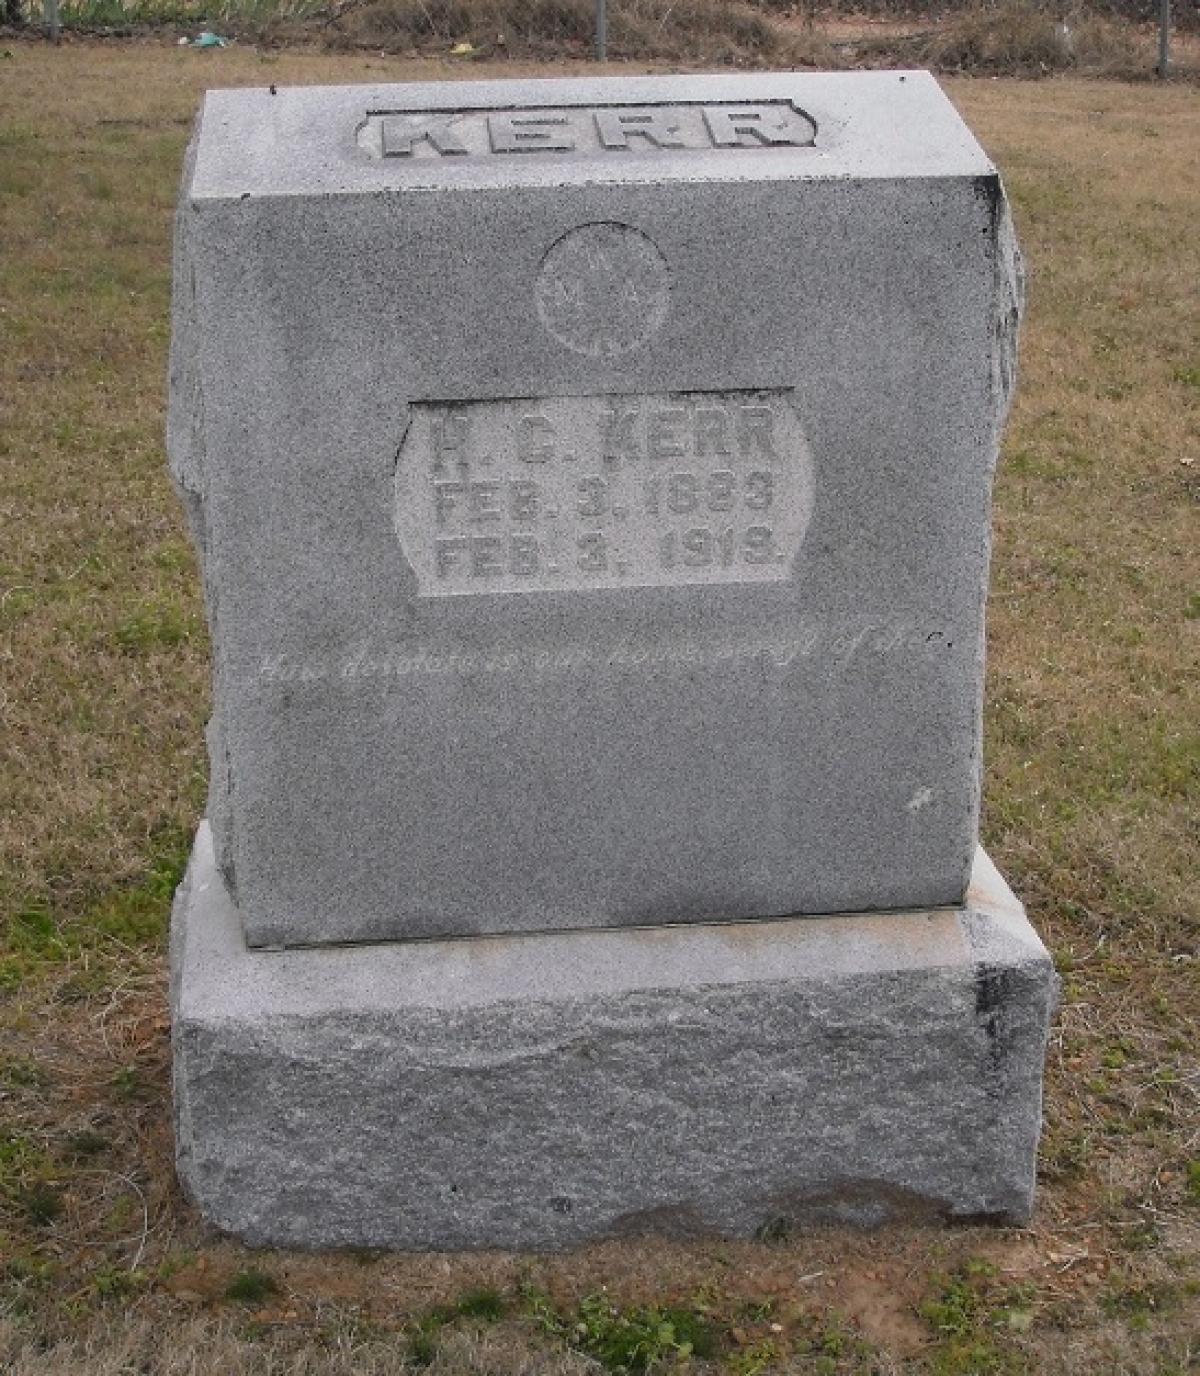 OK, Grove, Olympus Cemetery, Headstone, Kerr, H. C. 